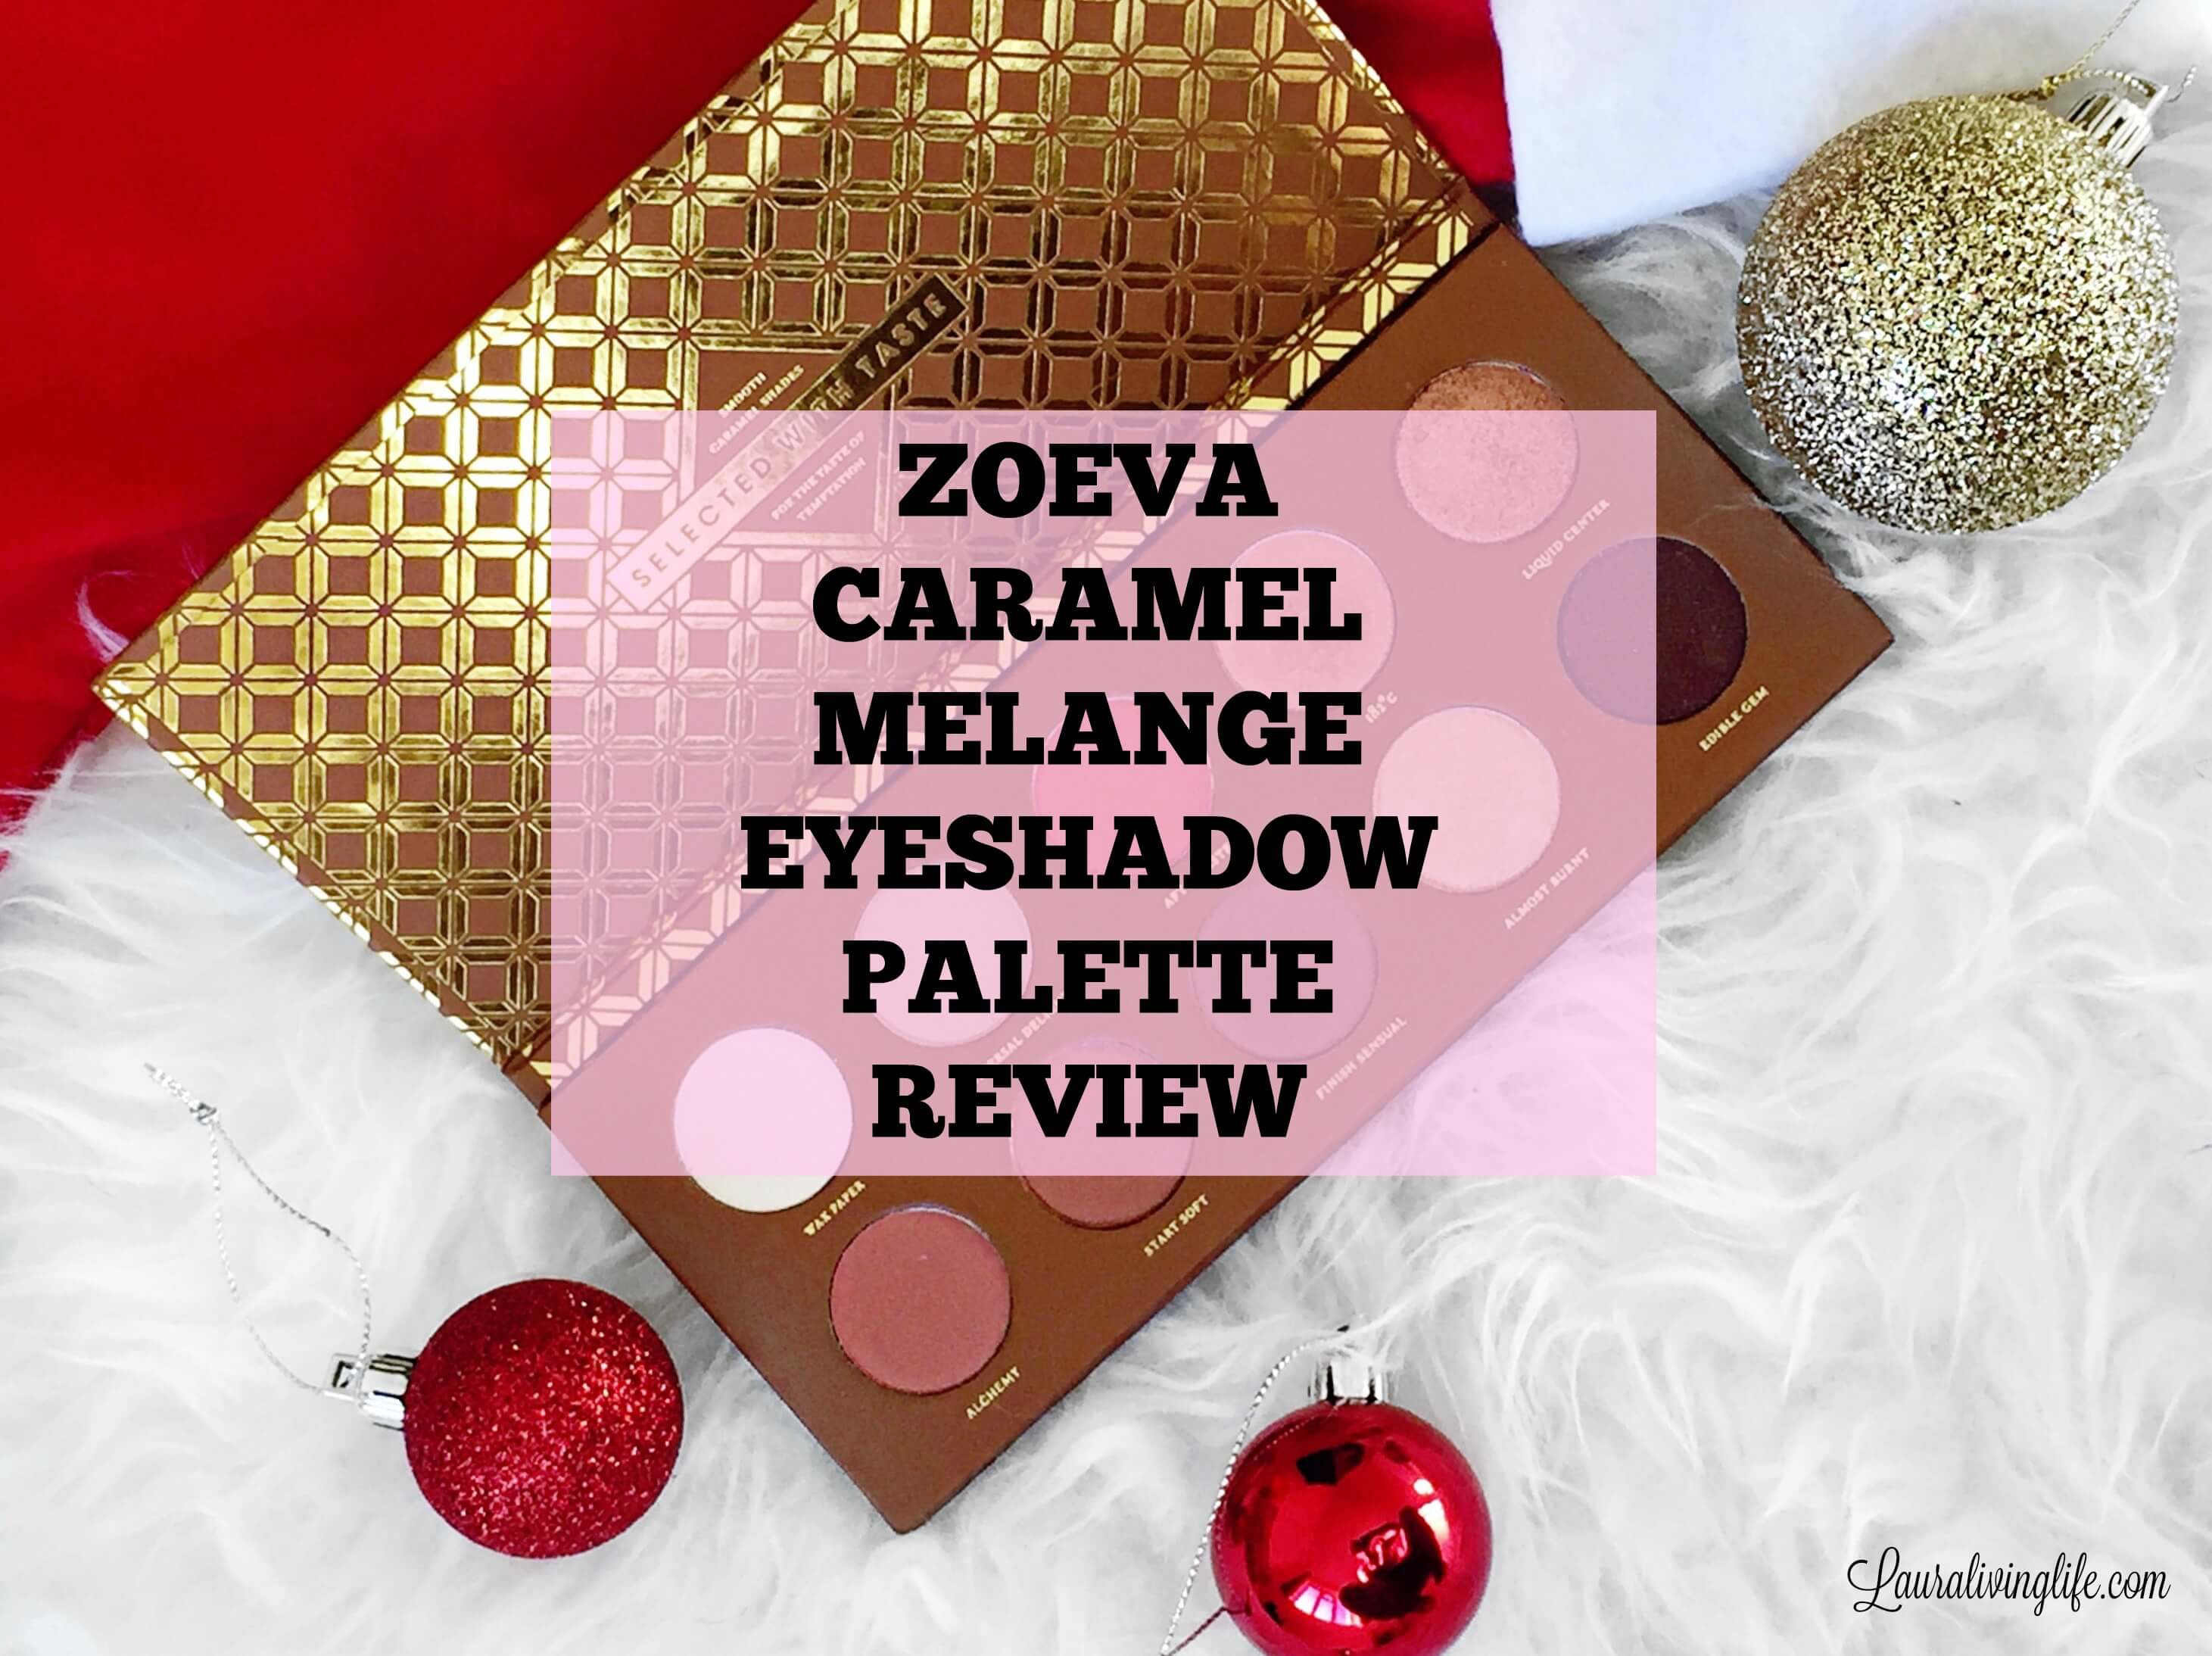 Zoeva caramel melange eyeshadow palette review-Lauralivinglife.com